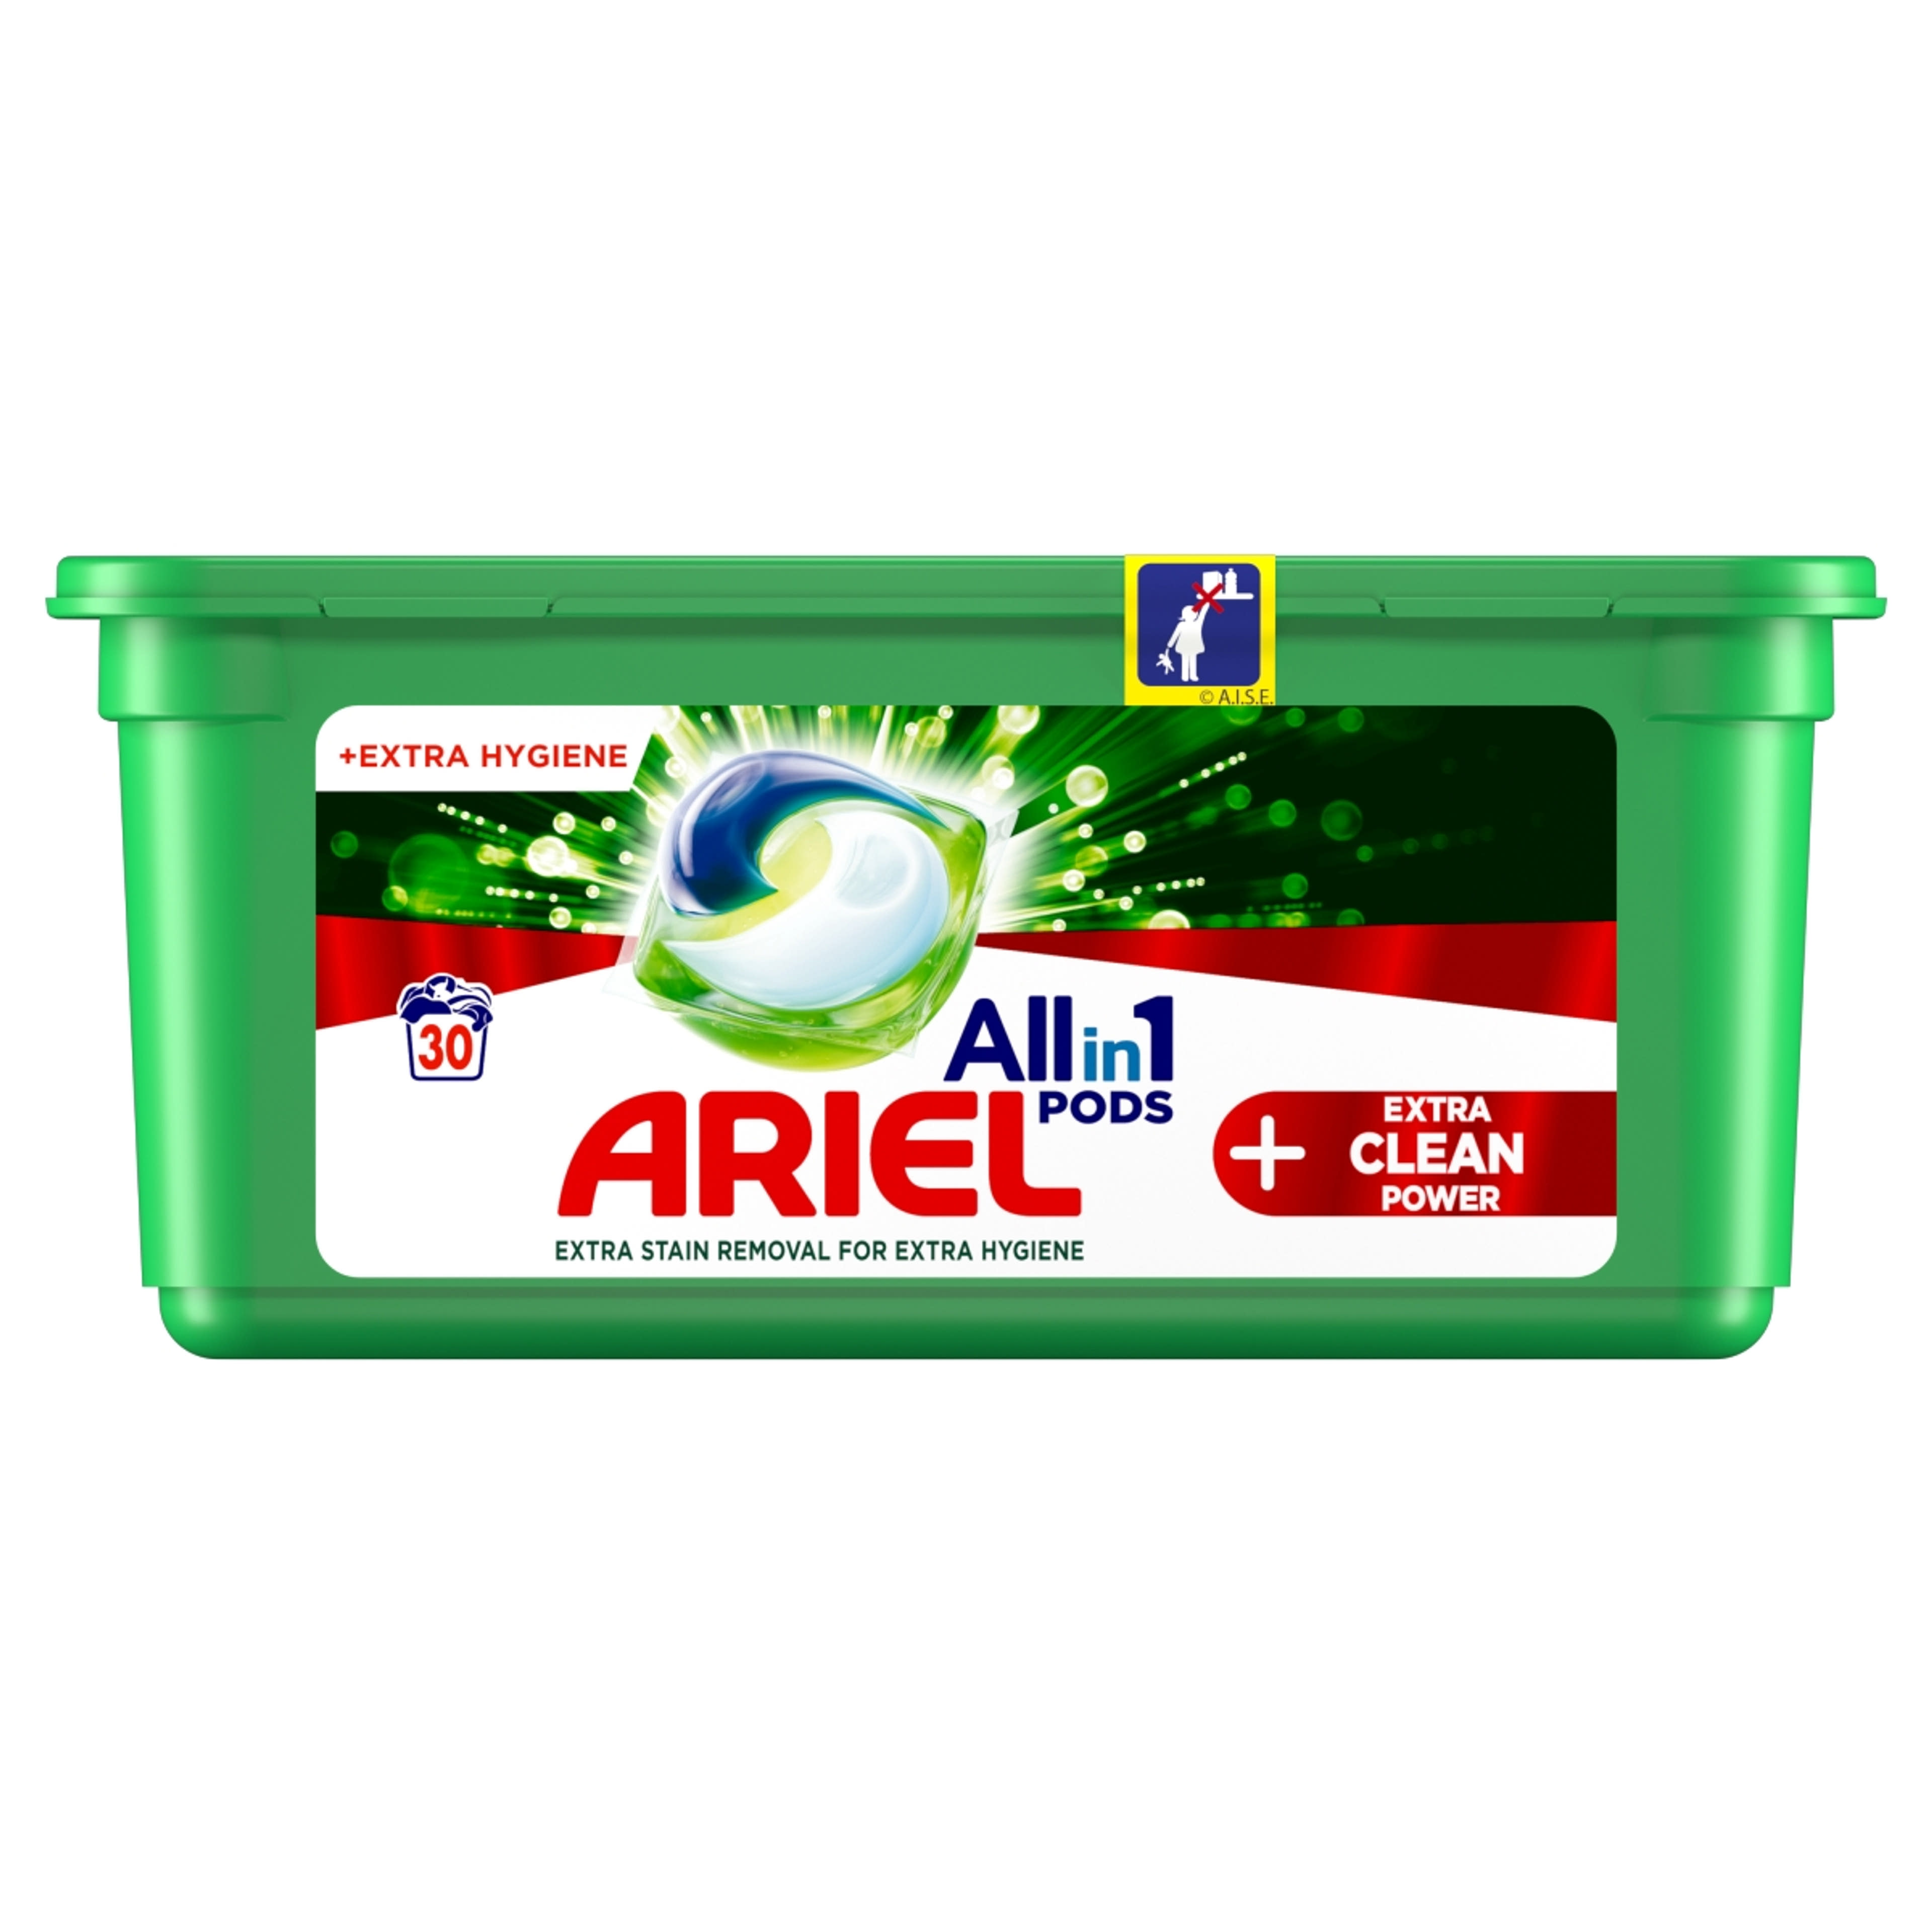 Ariel Allin1 PODS +Extra Clean Power mosókapszula - 30 db